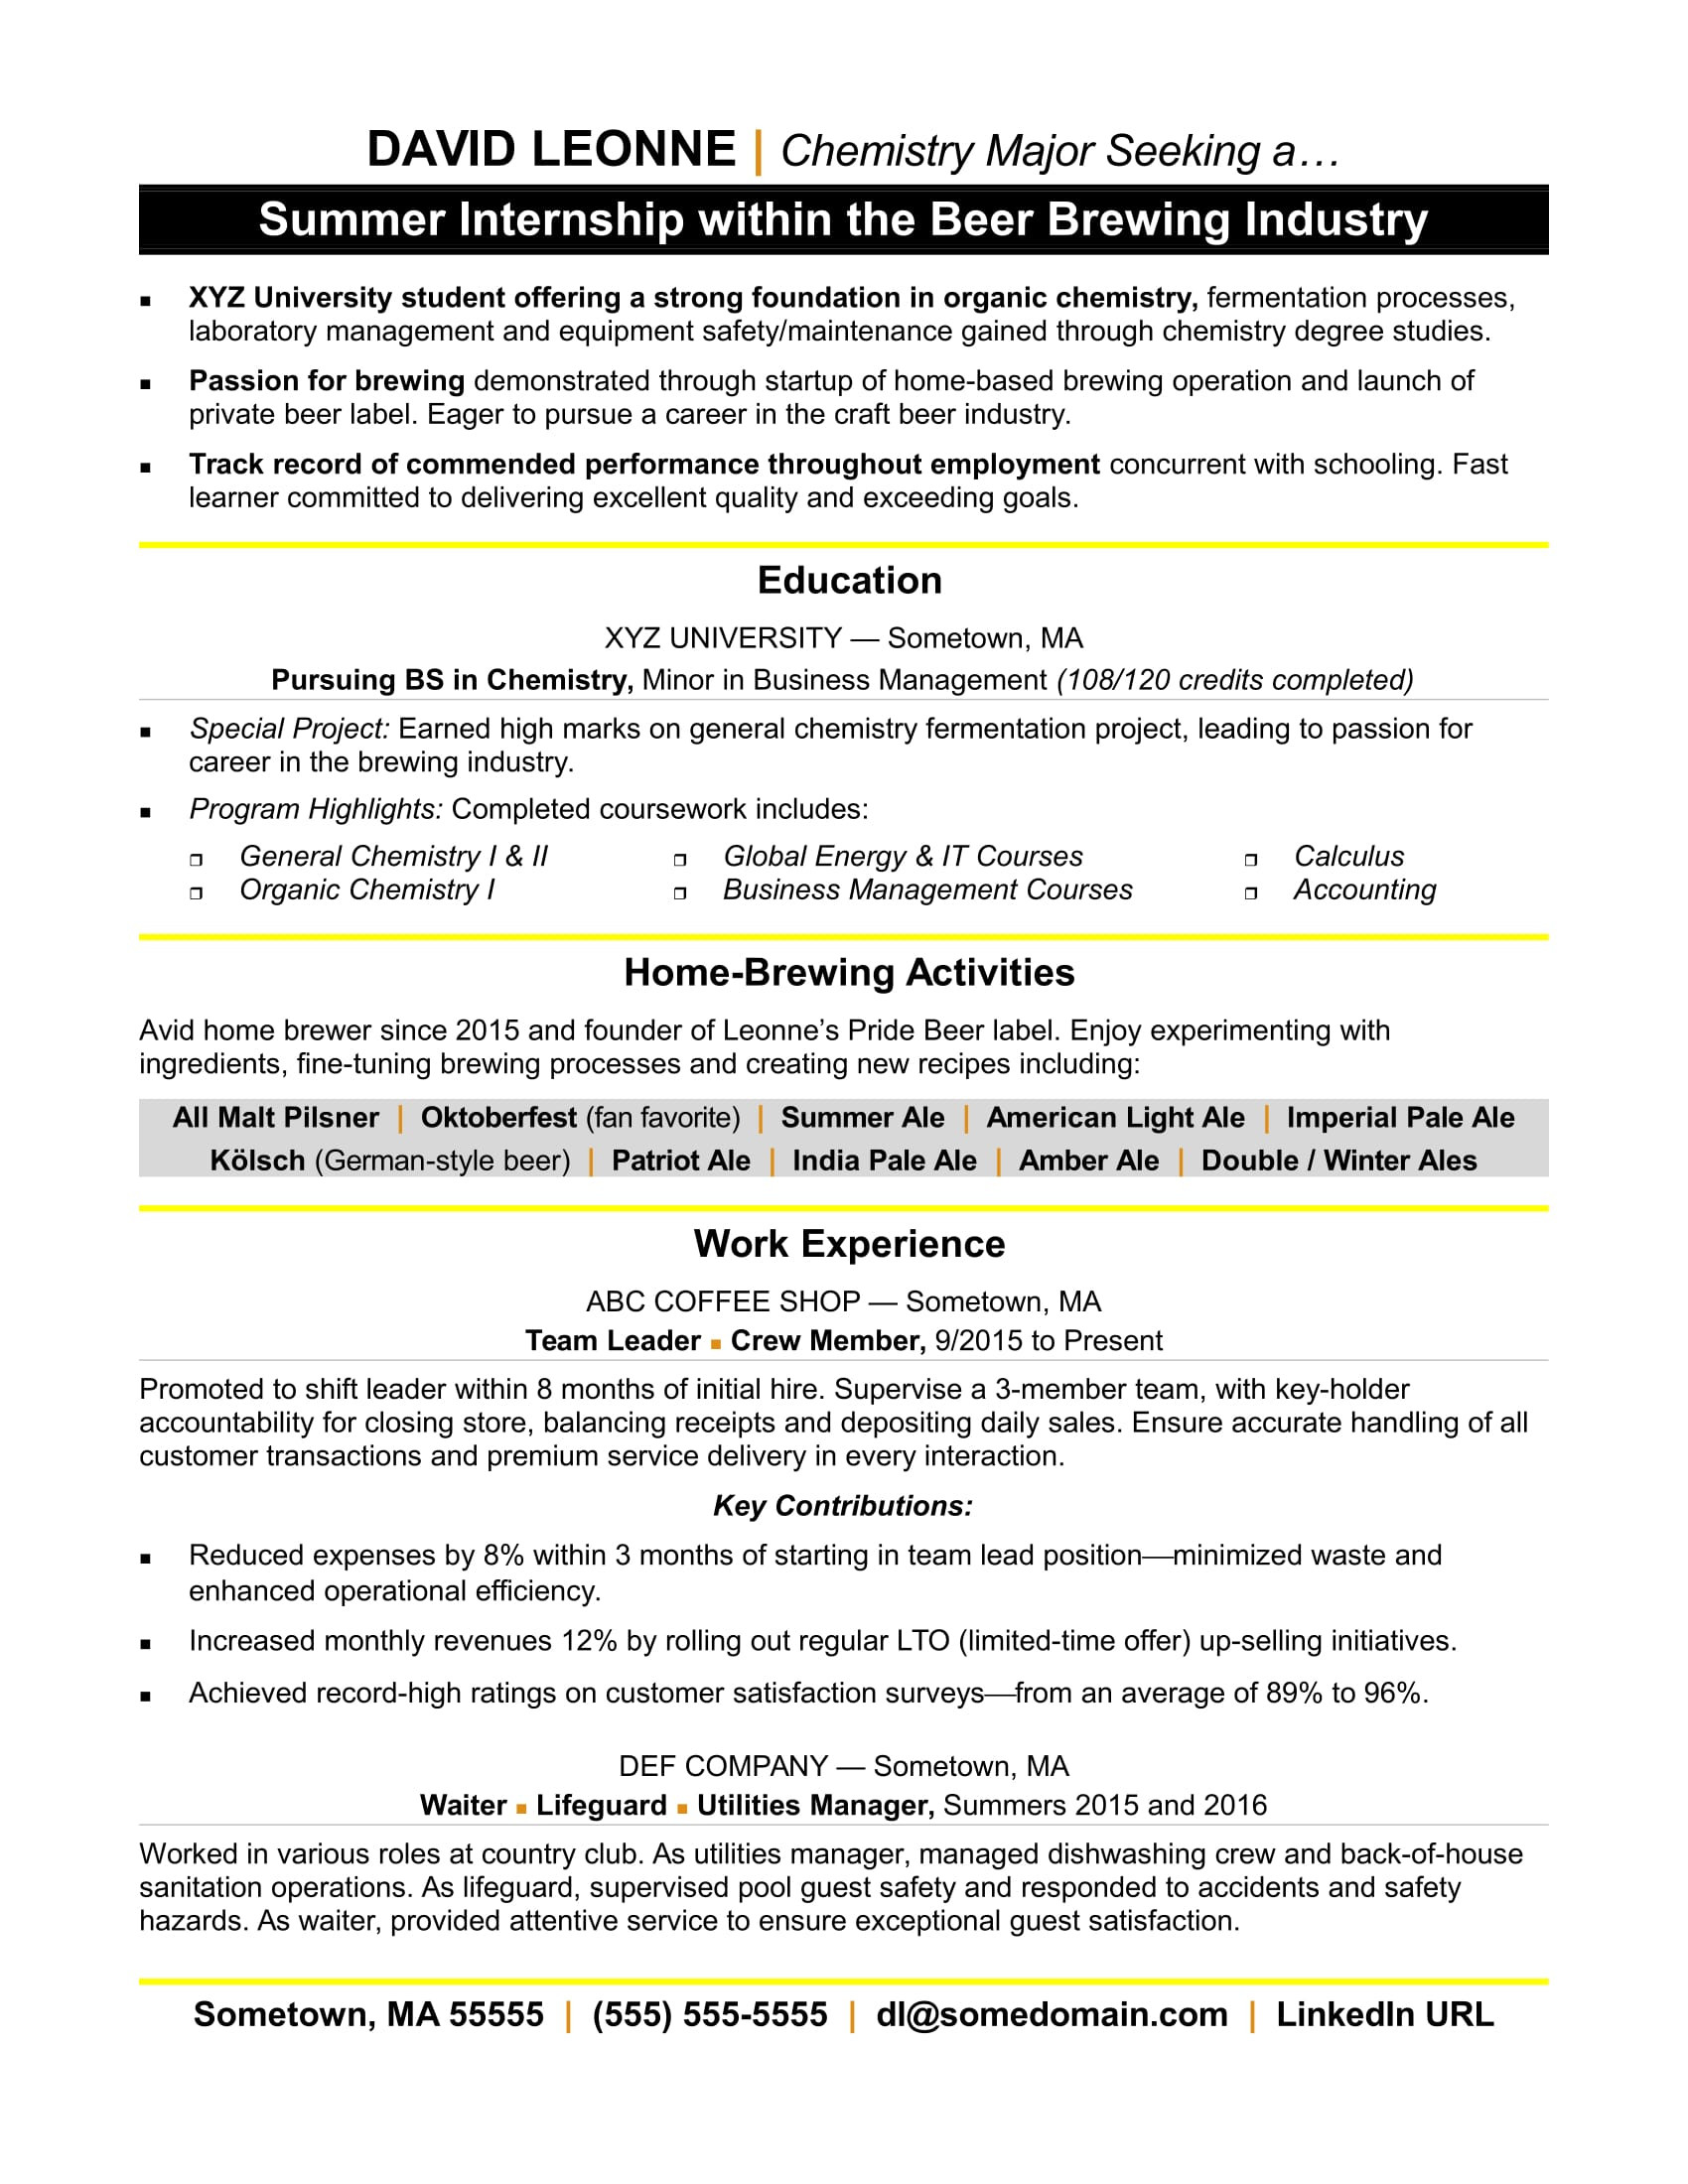 Resume Samples that Include Internship Experience Resume for Internship Monster.com